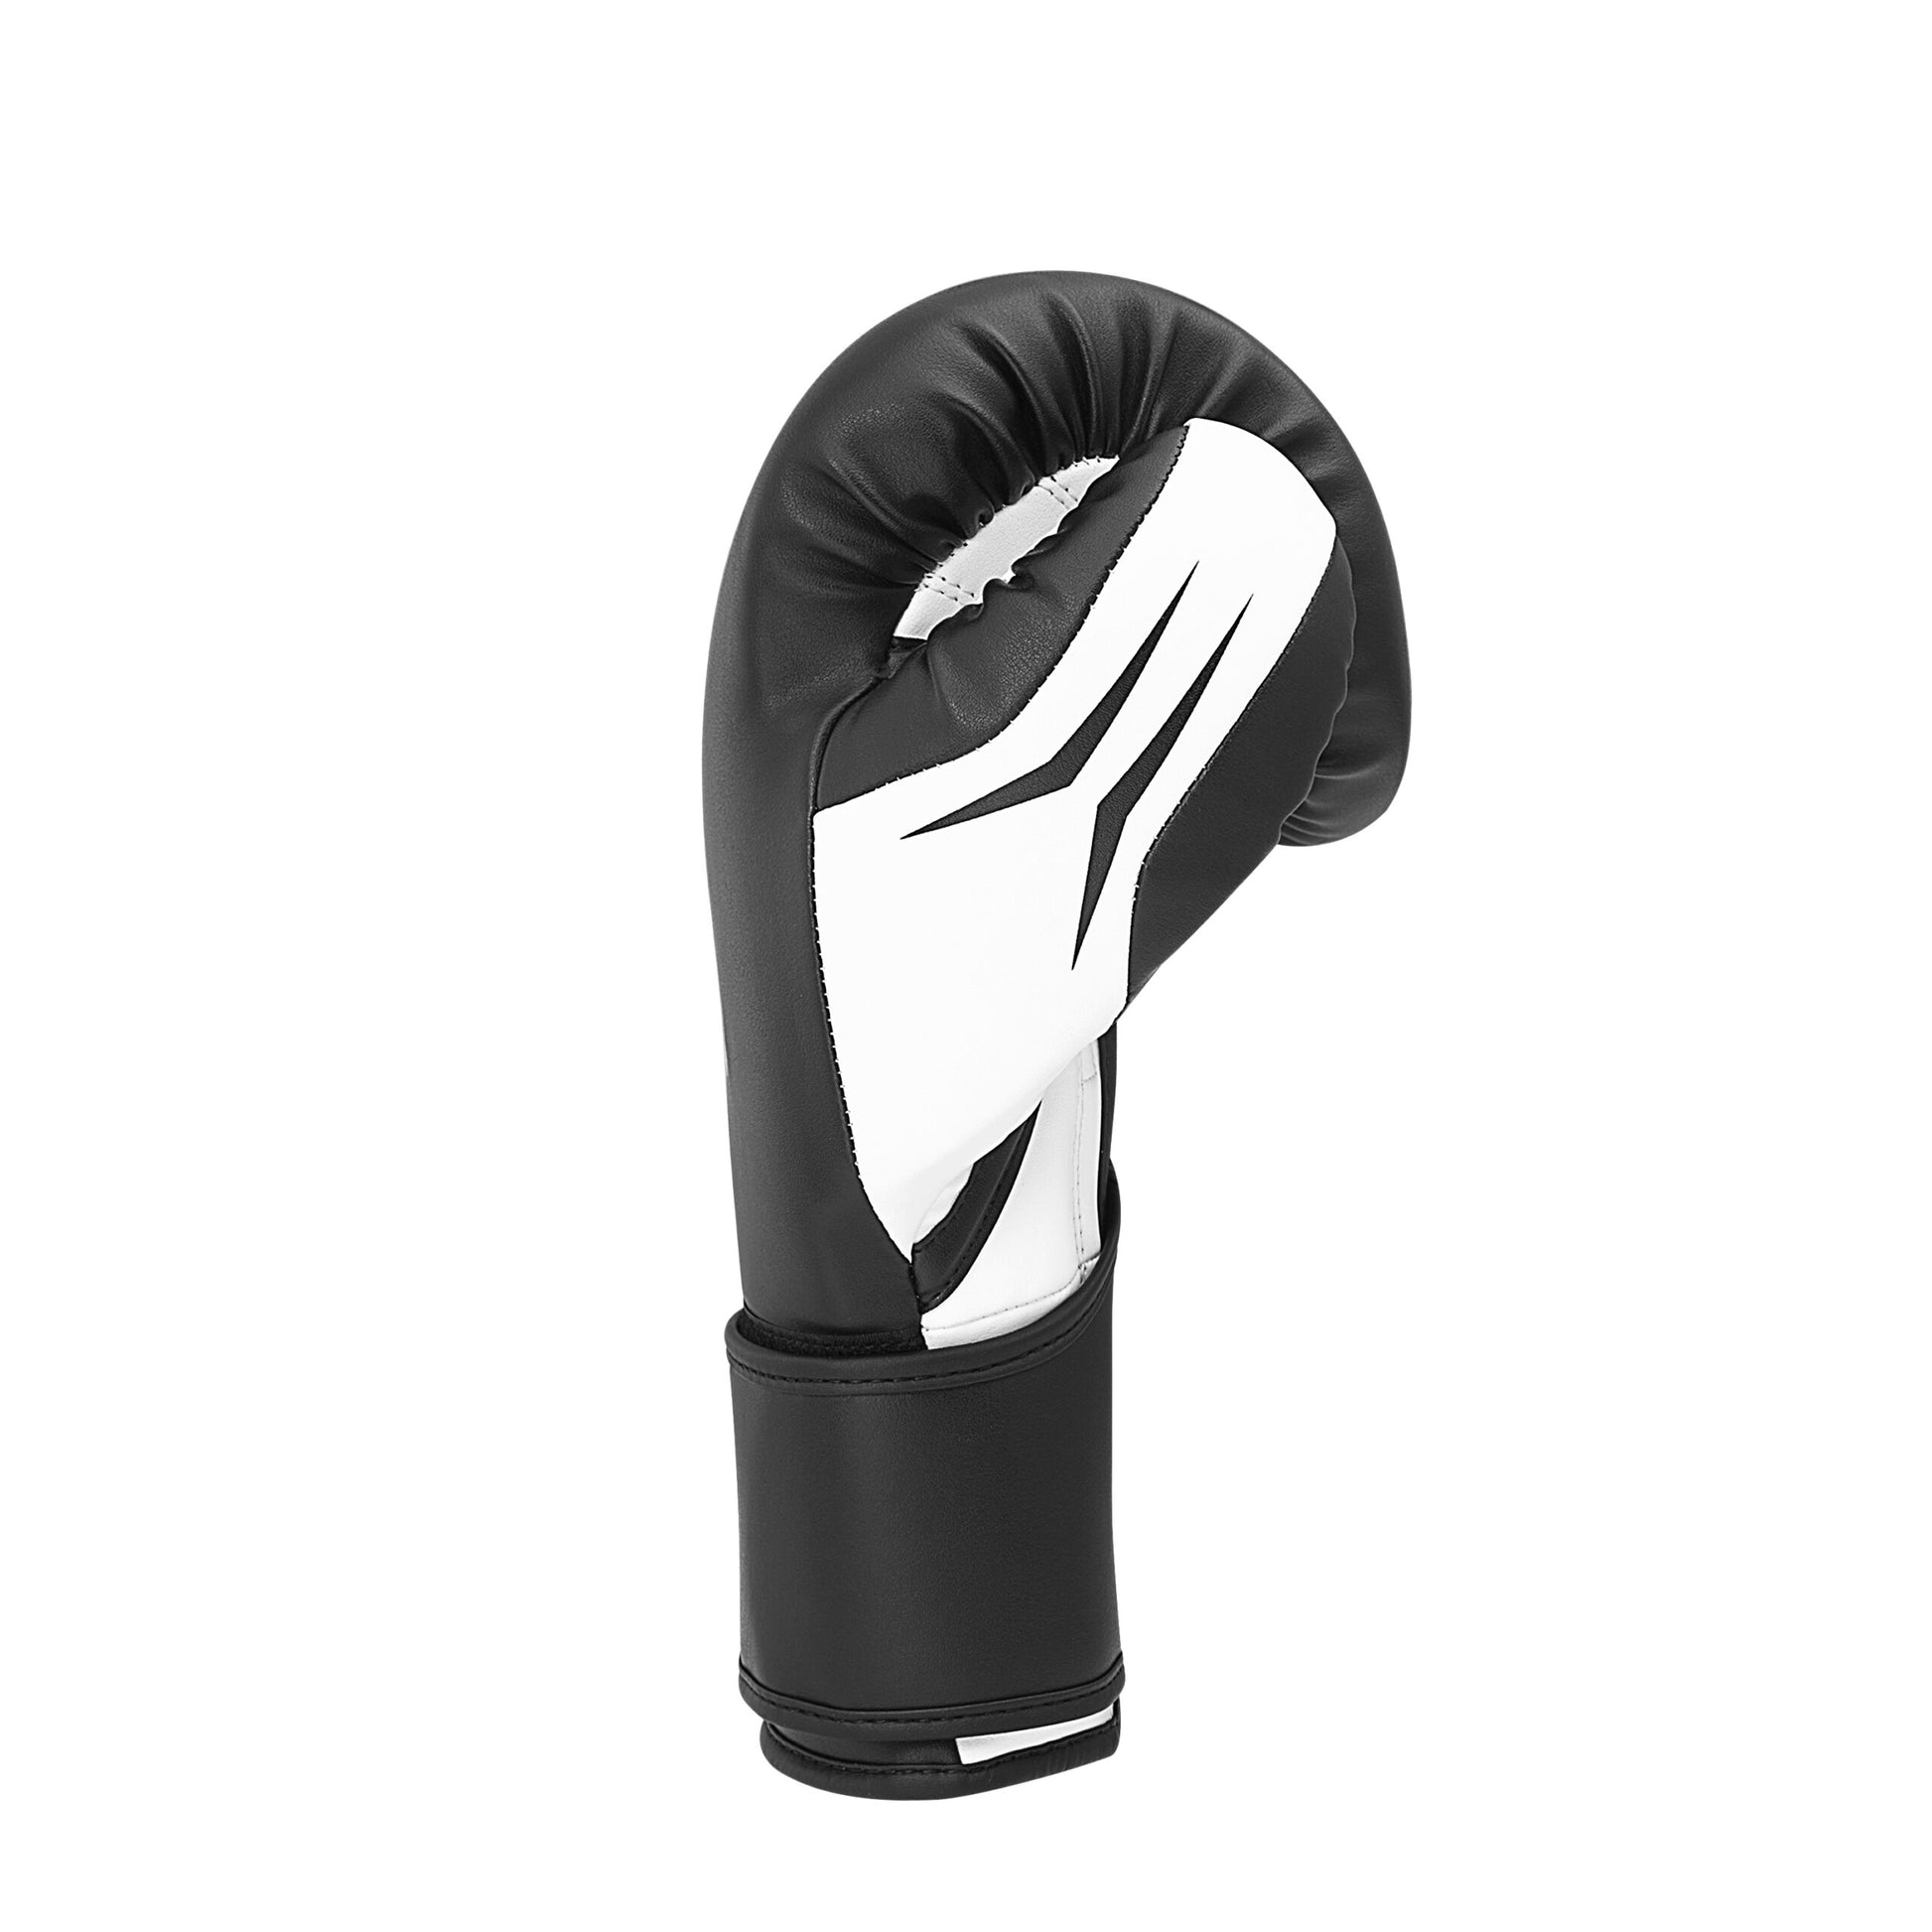 Adispd350tg Adidas Tilt 350 Pro Training Boxing Glove Strap Black White 04